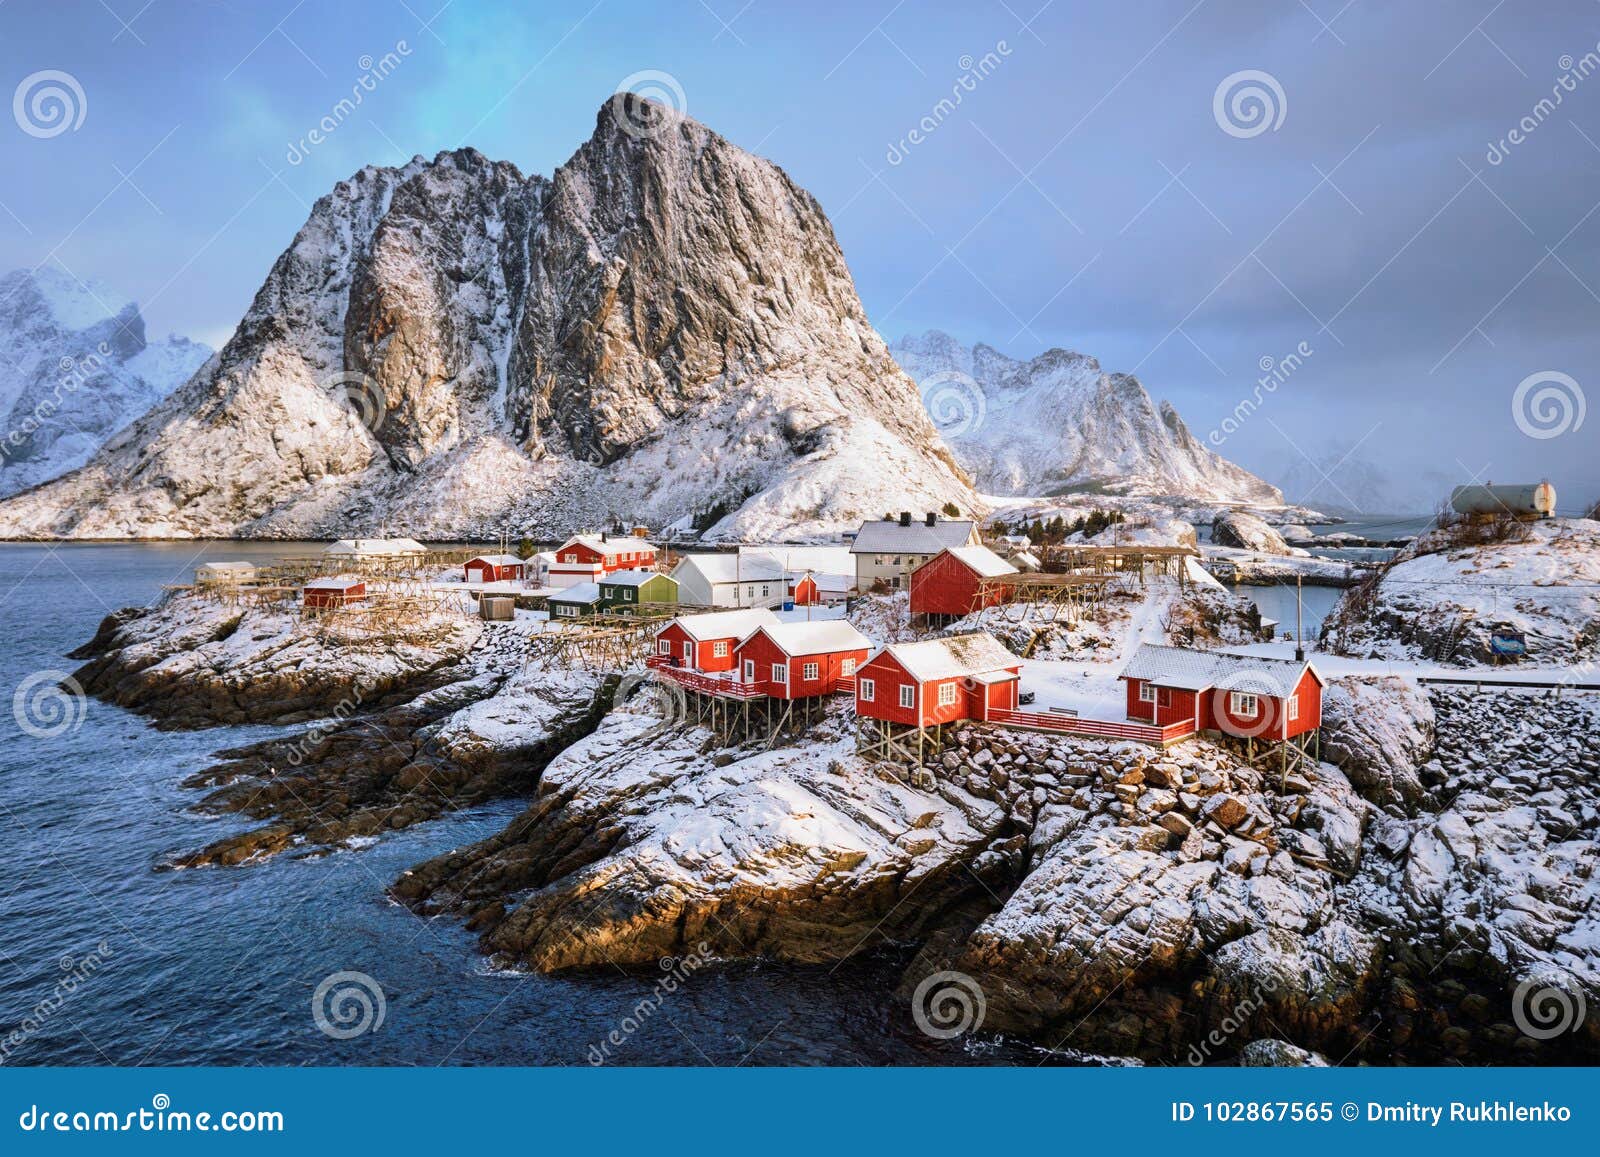 hamnoy fishing village on lofoten islands, norway